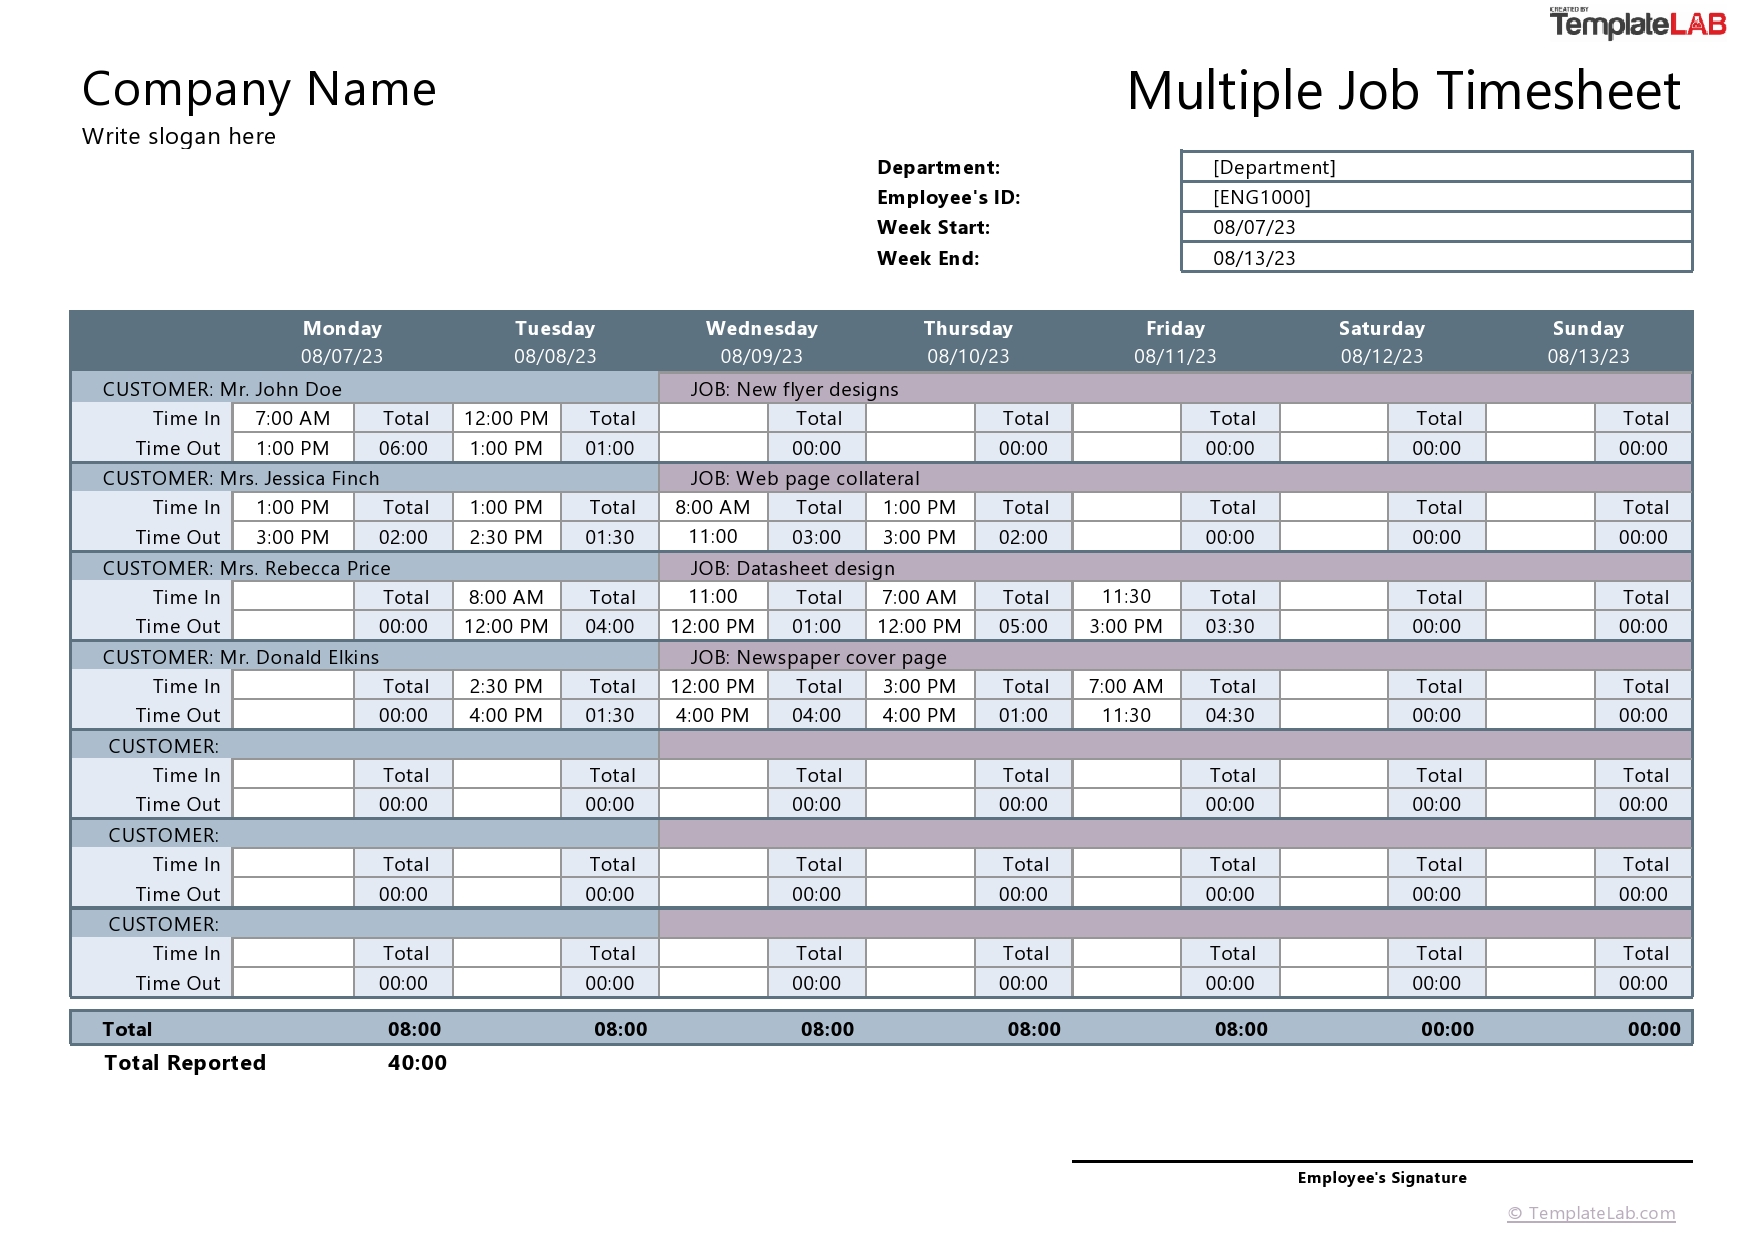 Free Multiple Job Timesheet Template